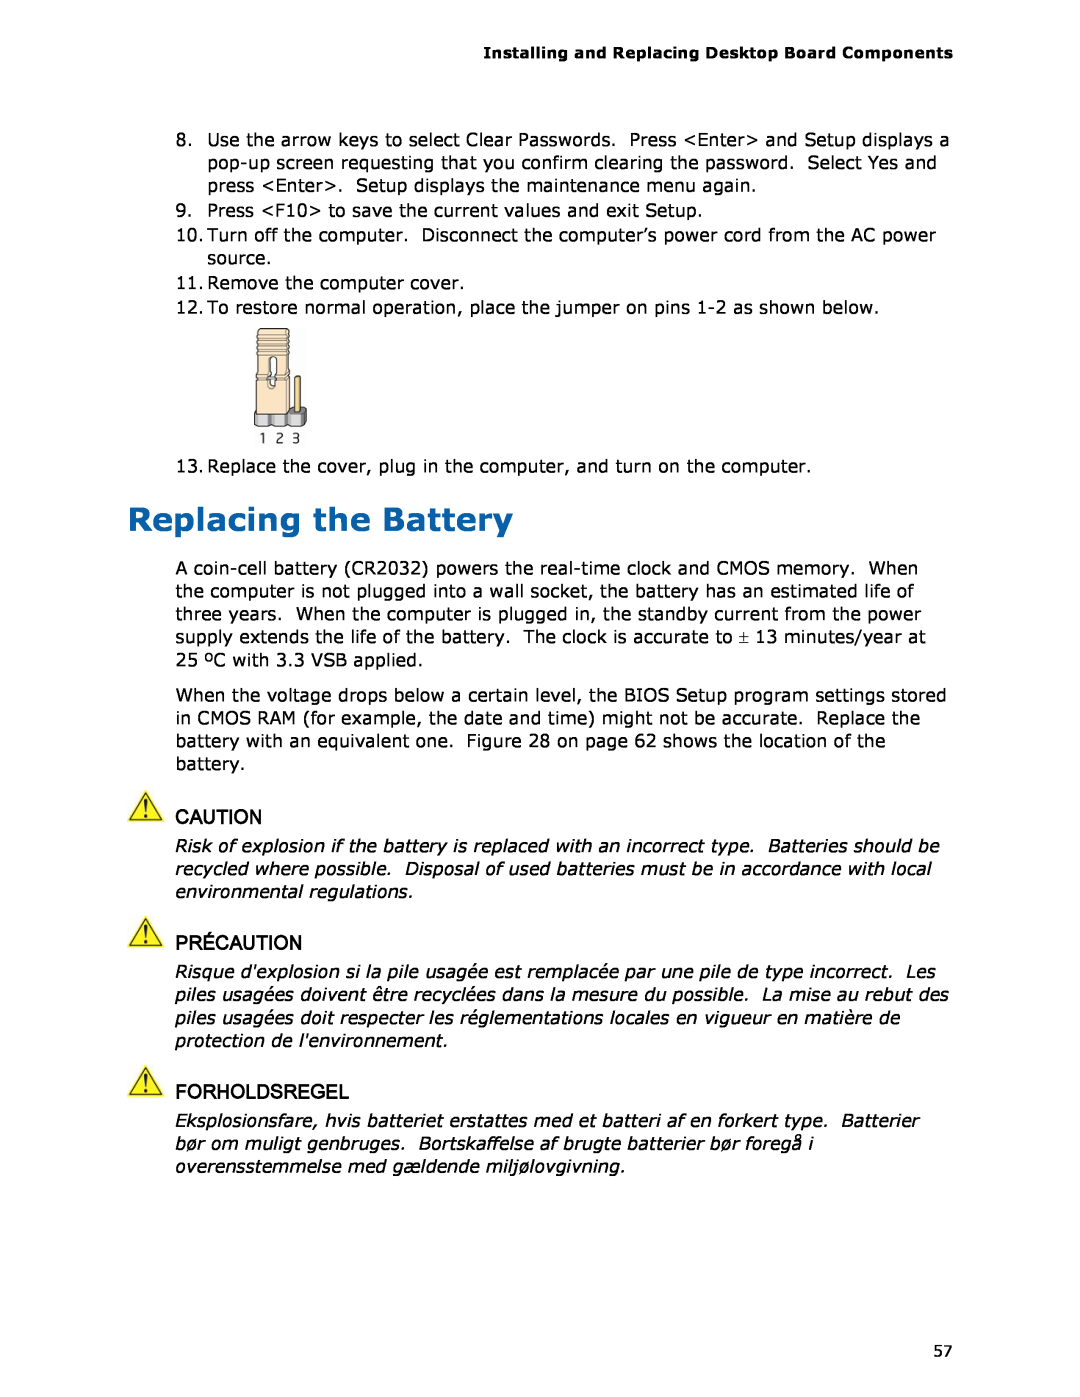 Intel BOXDH55HC manual Replacing the Battery, Précaution, Forholdsregel 